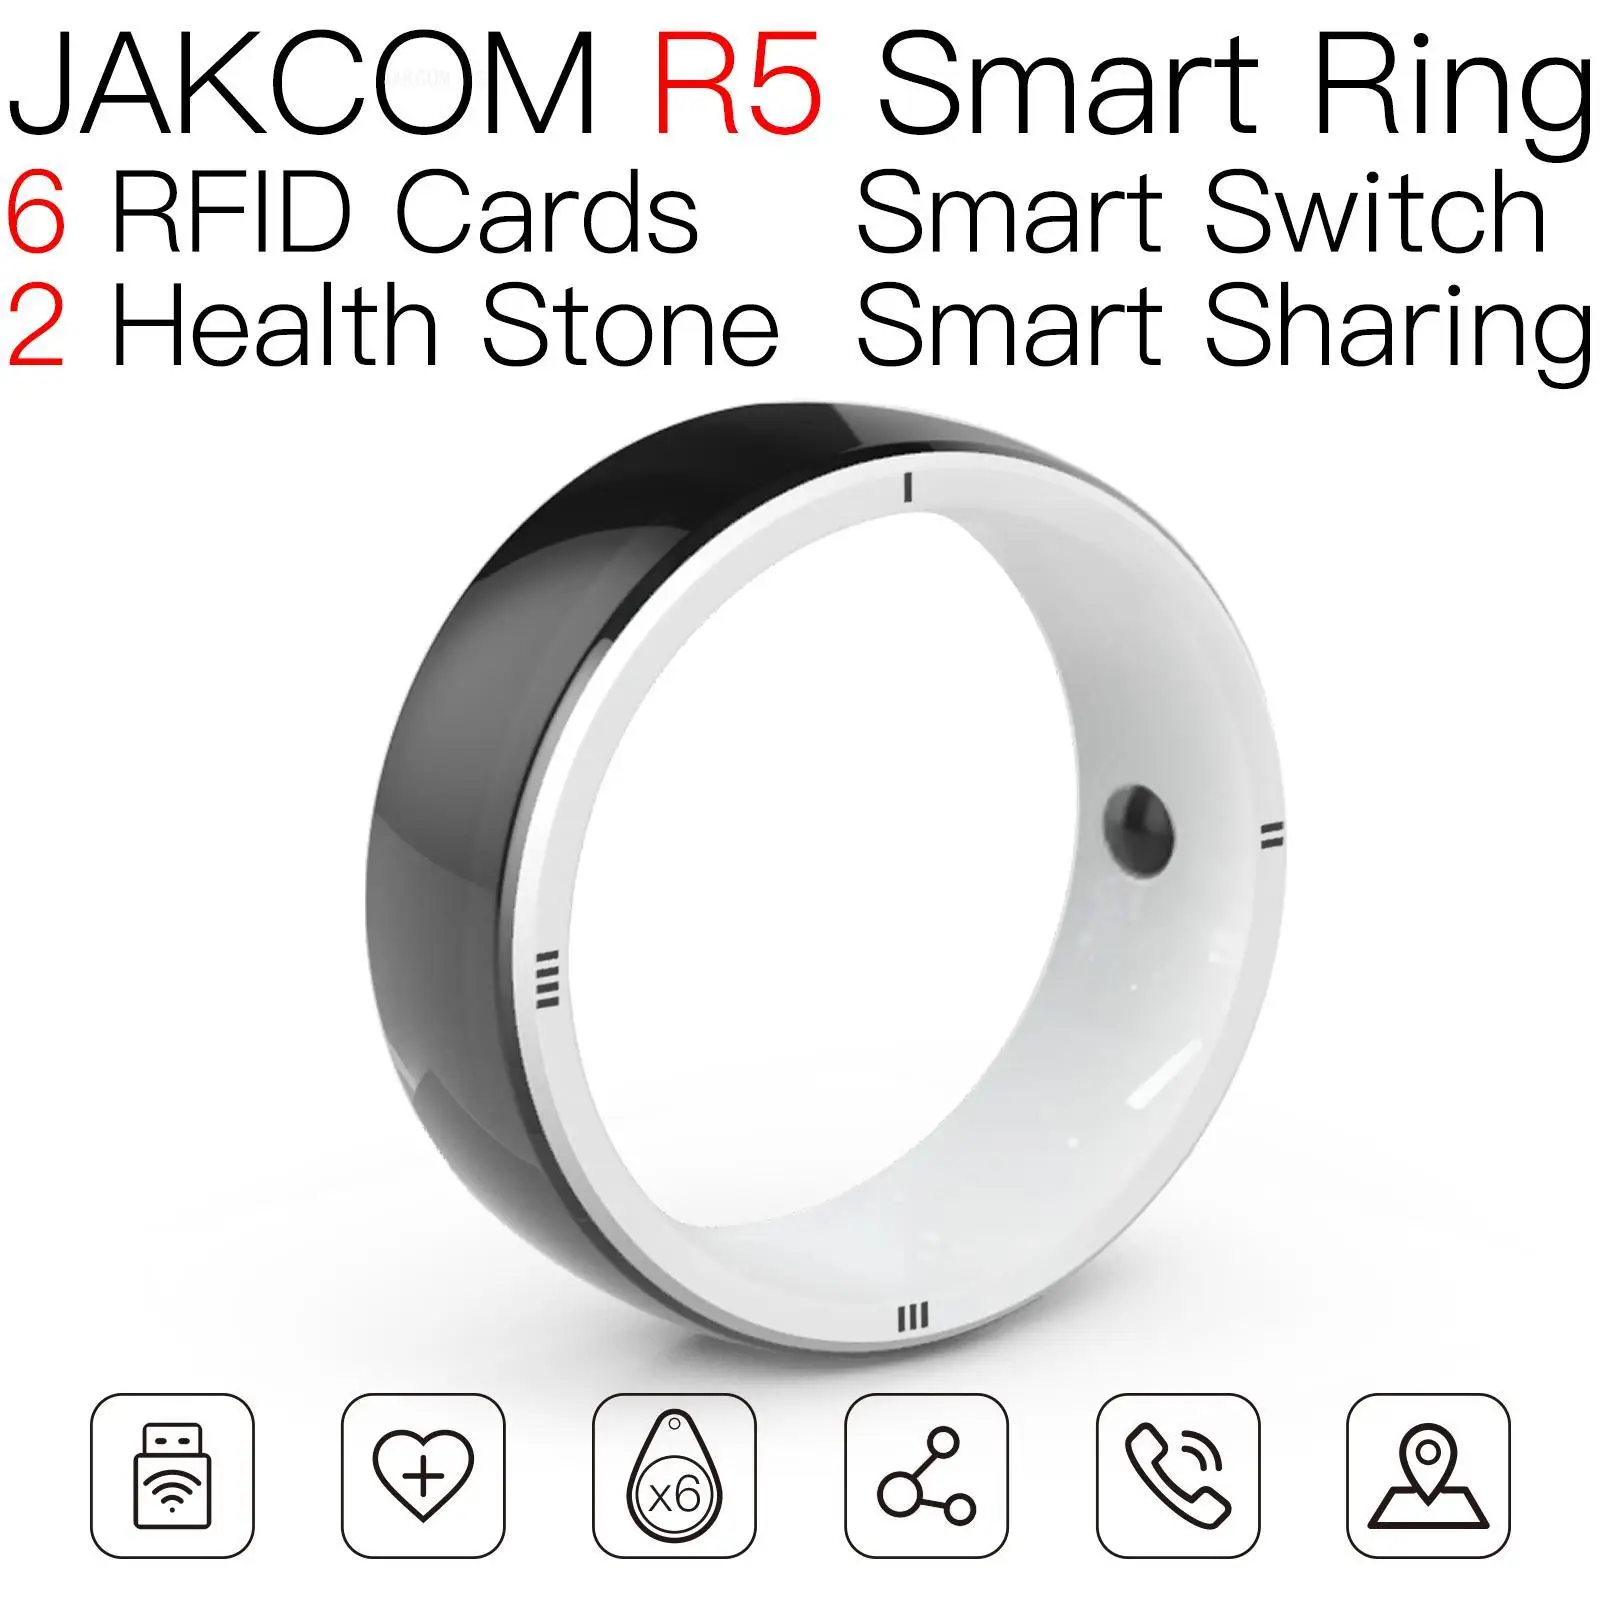 

JAKCOM R5 Smart Ring Super value than cards key tags rfid 125khz rewritable dual chip adesivi dog netflix code tag joia sticker